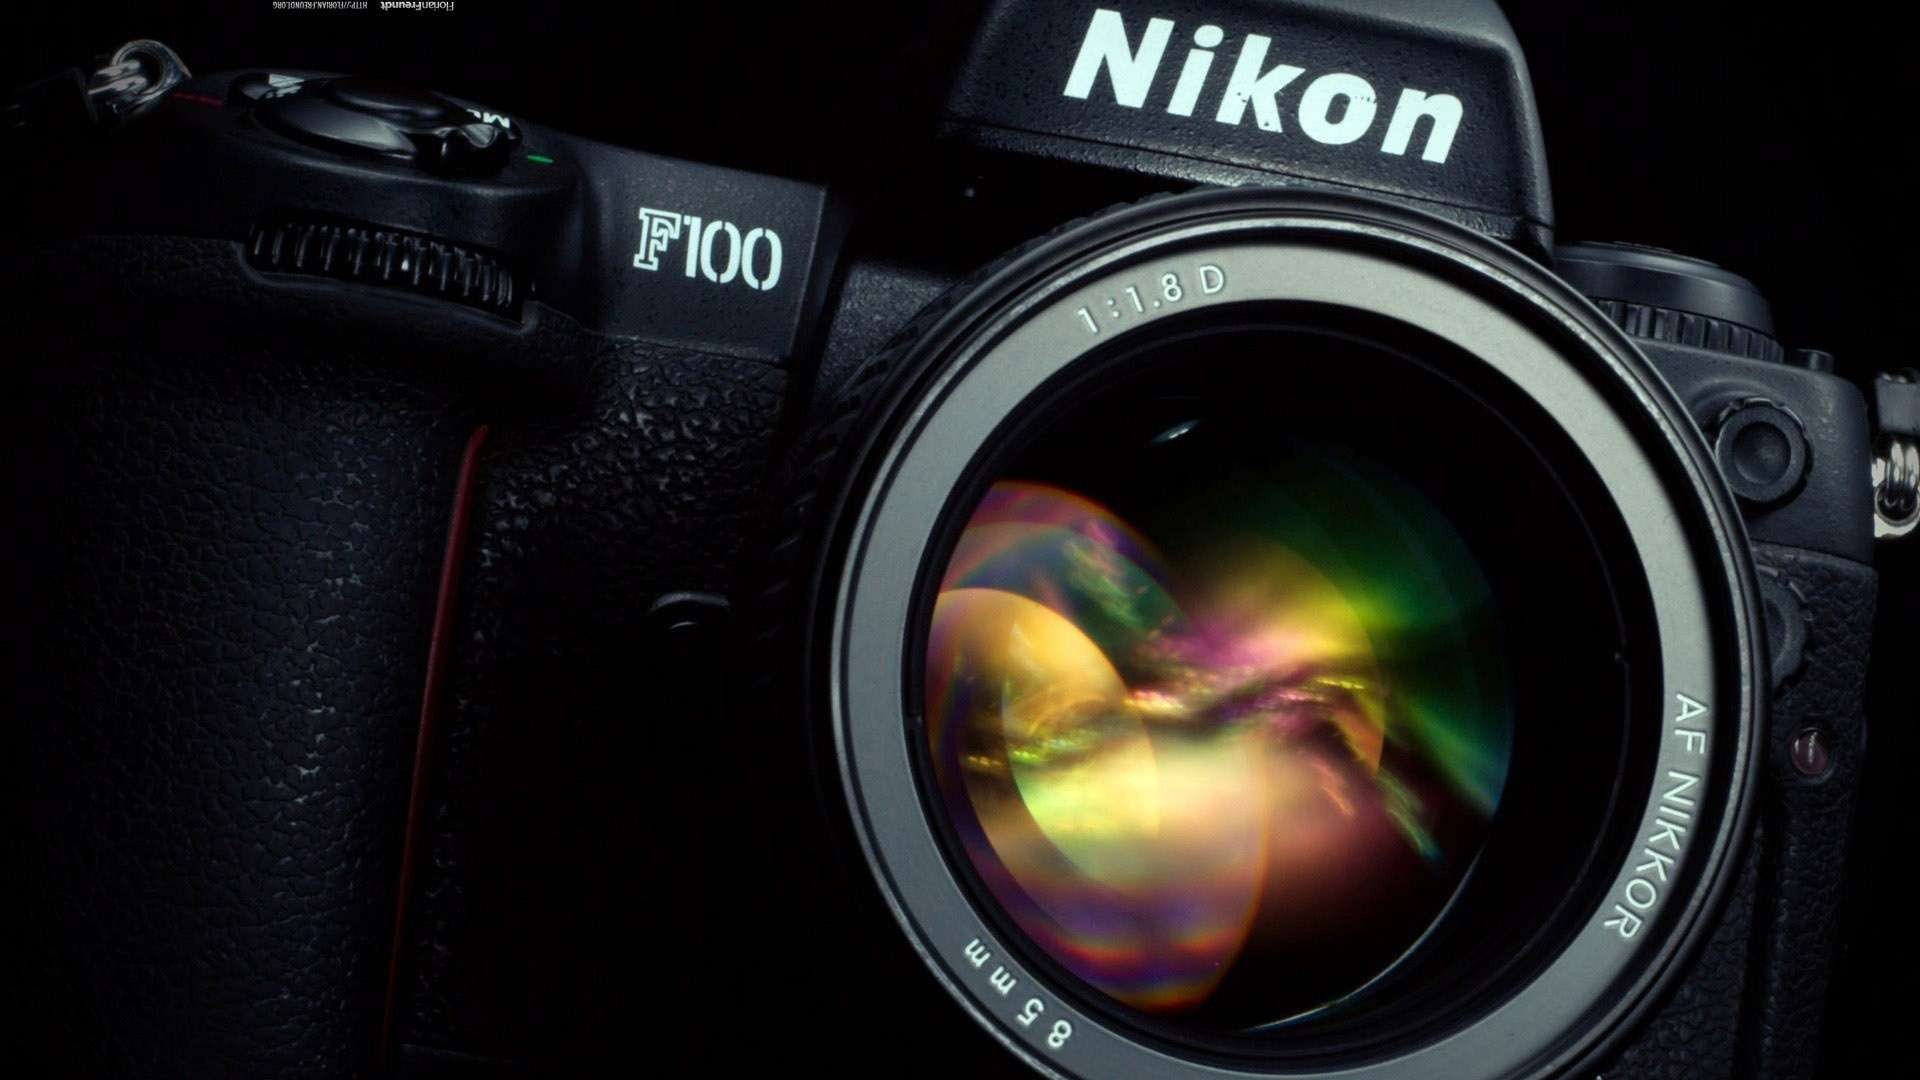 Nikon F100 for 1920 x 1080 HDTV 1080p resolution